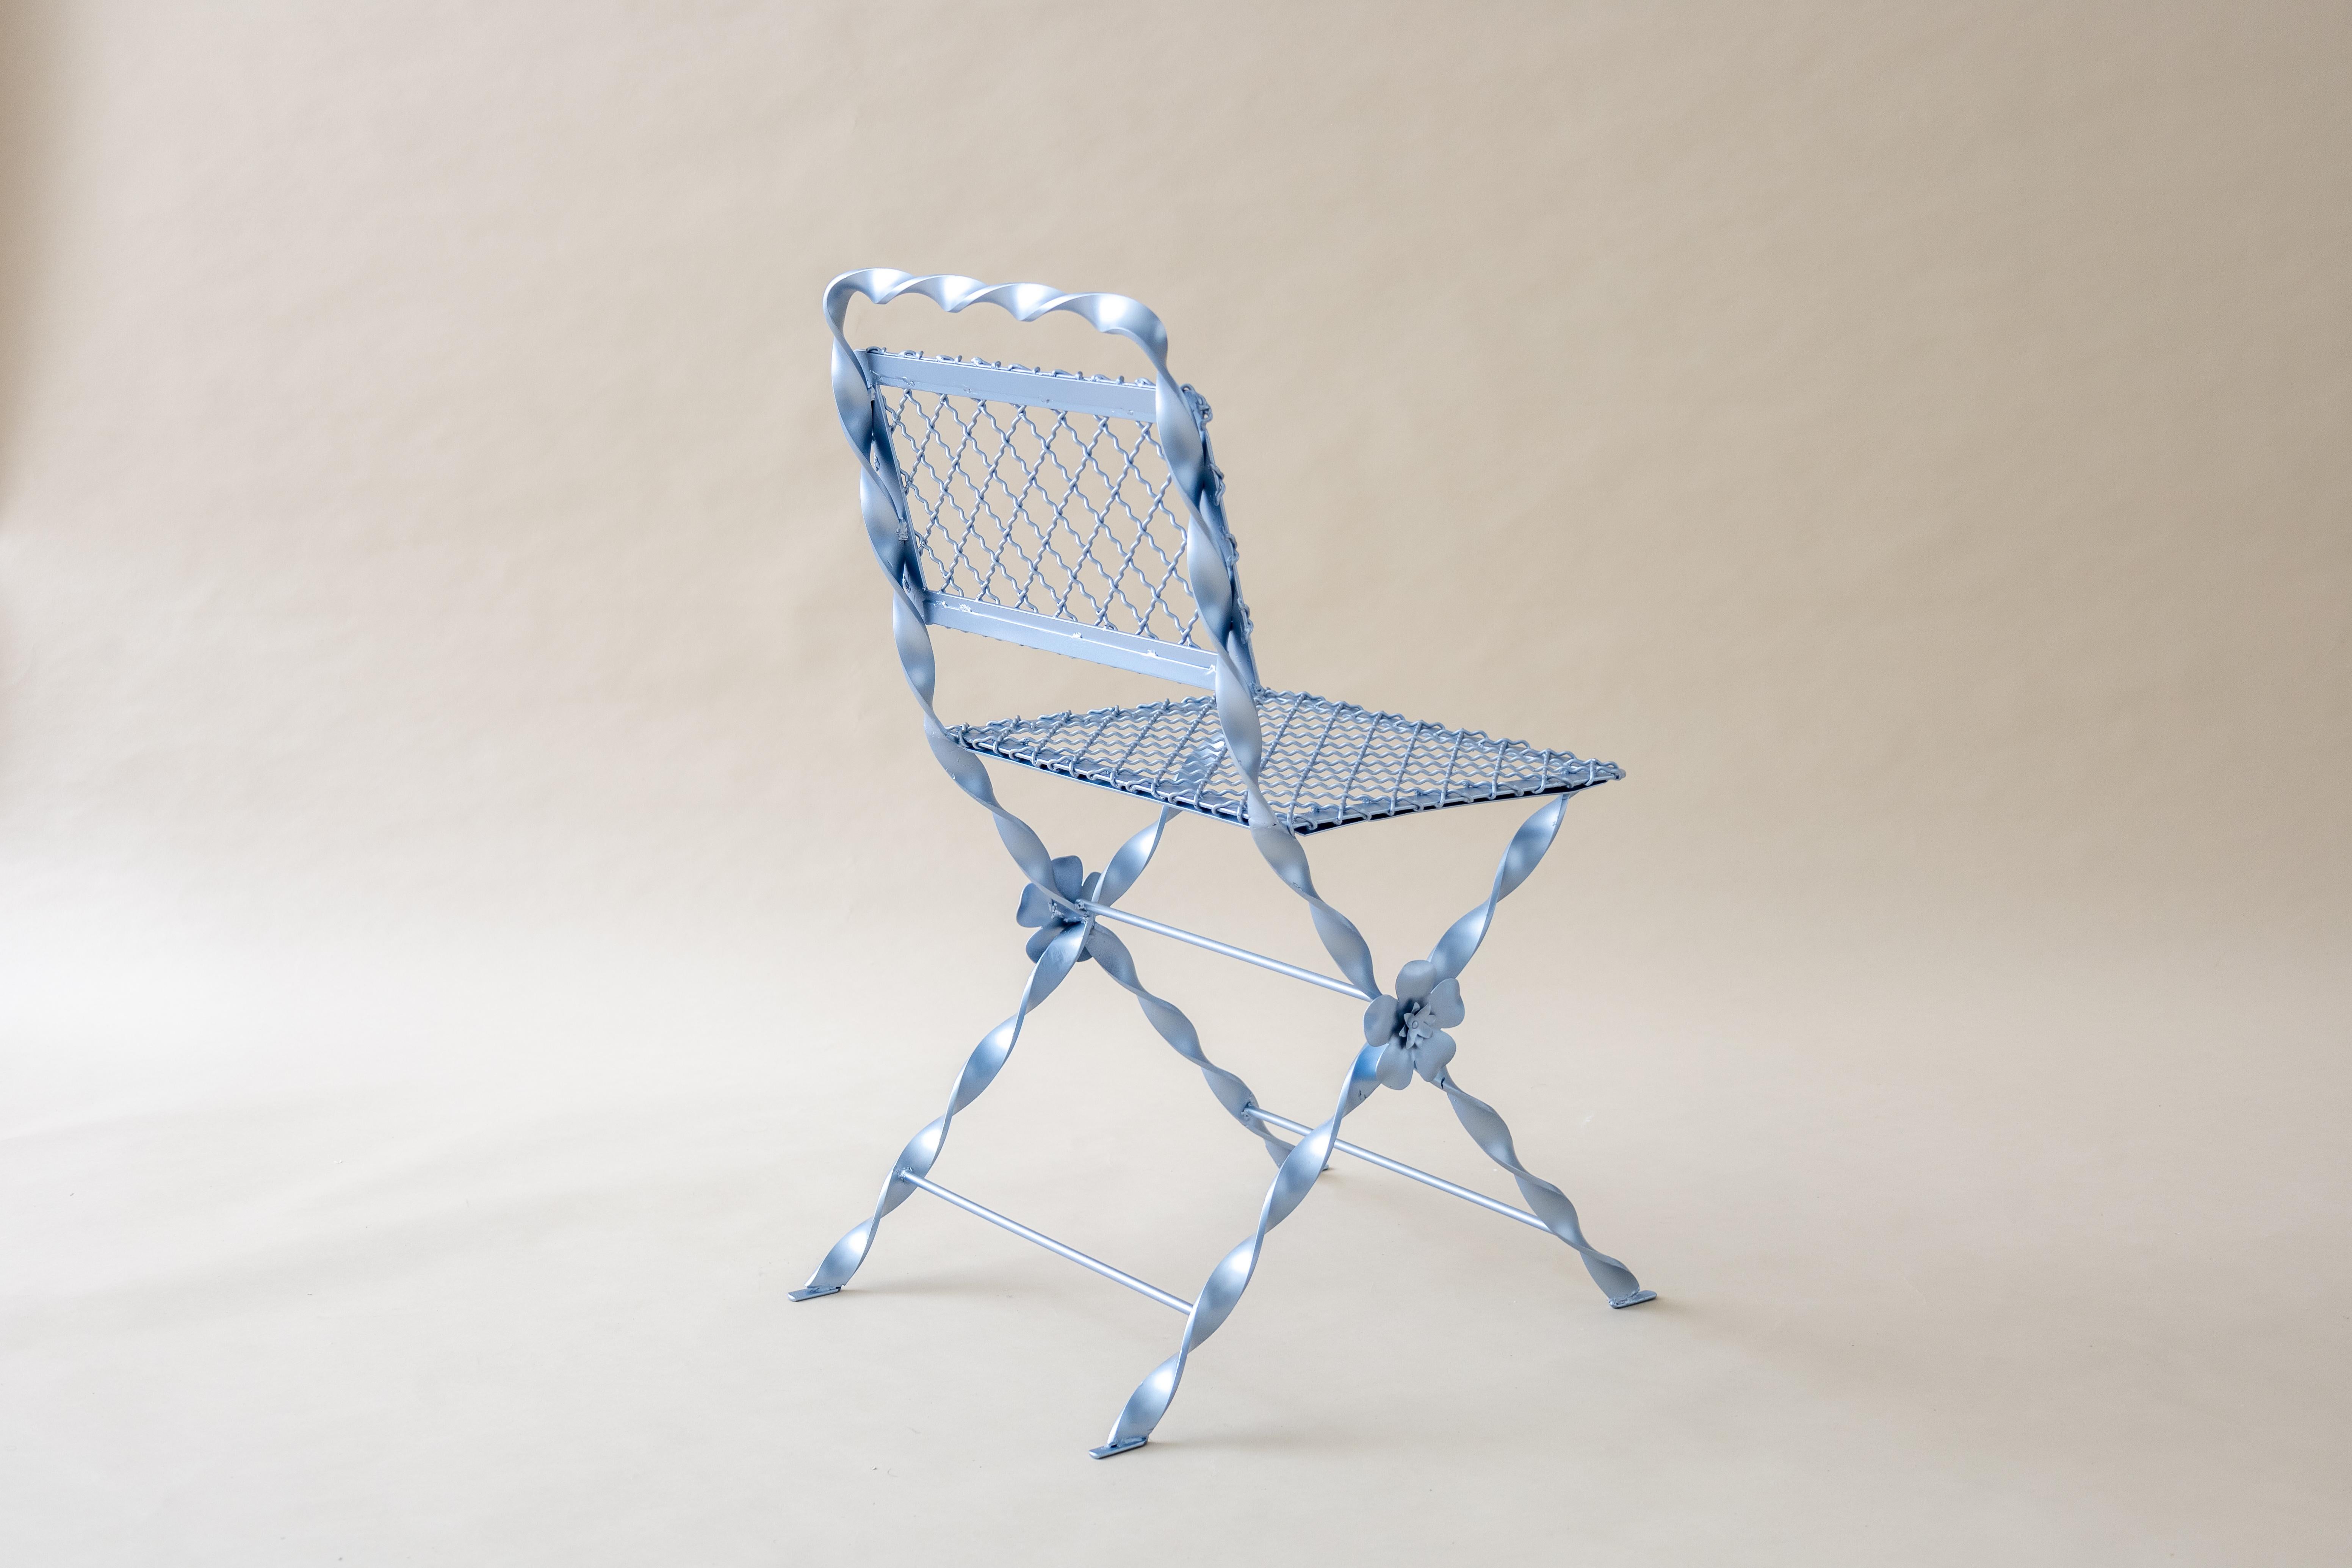 Wrought Iron Garden Chair Metallic Sky Blue finish Contemporary Design For Sale 3